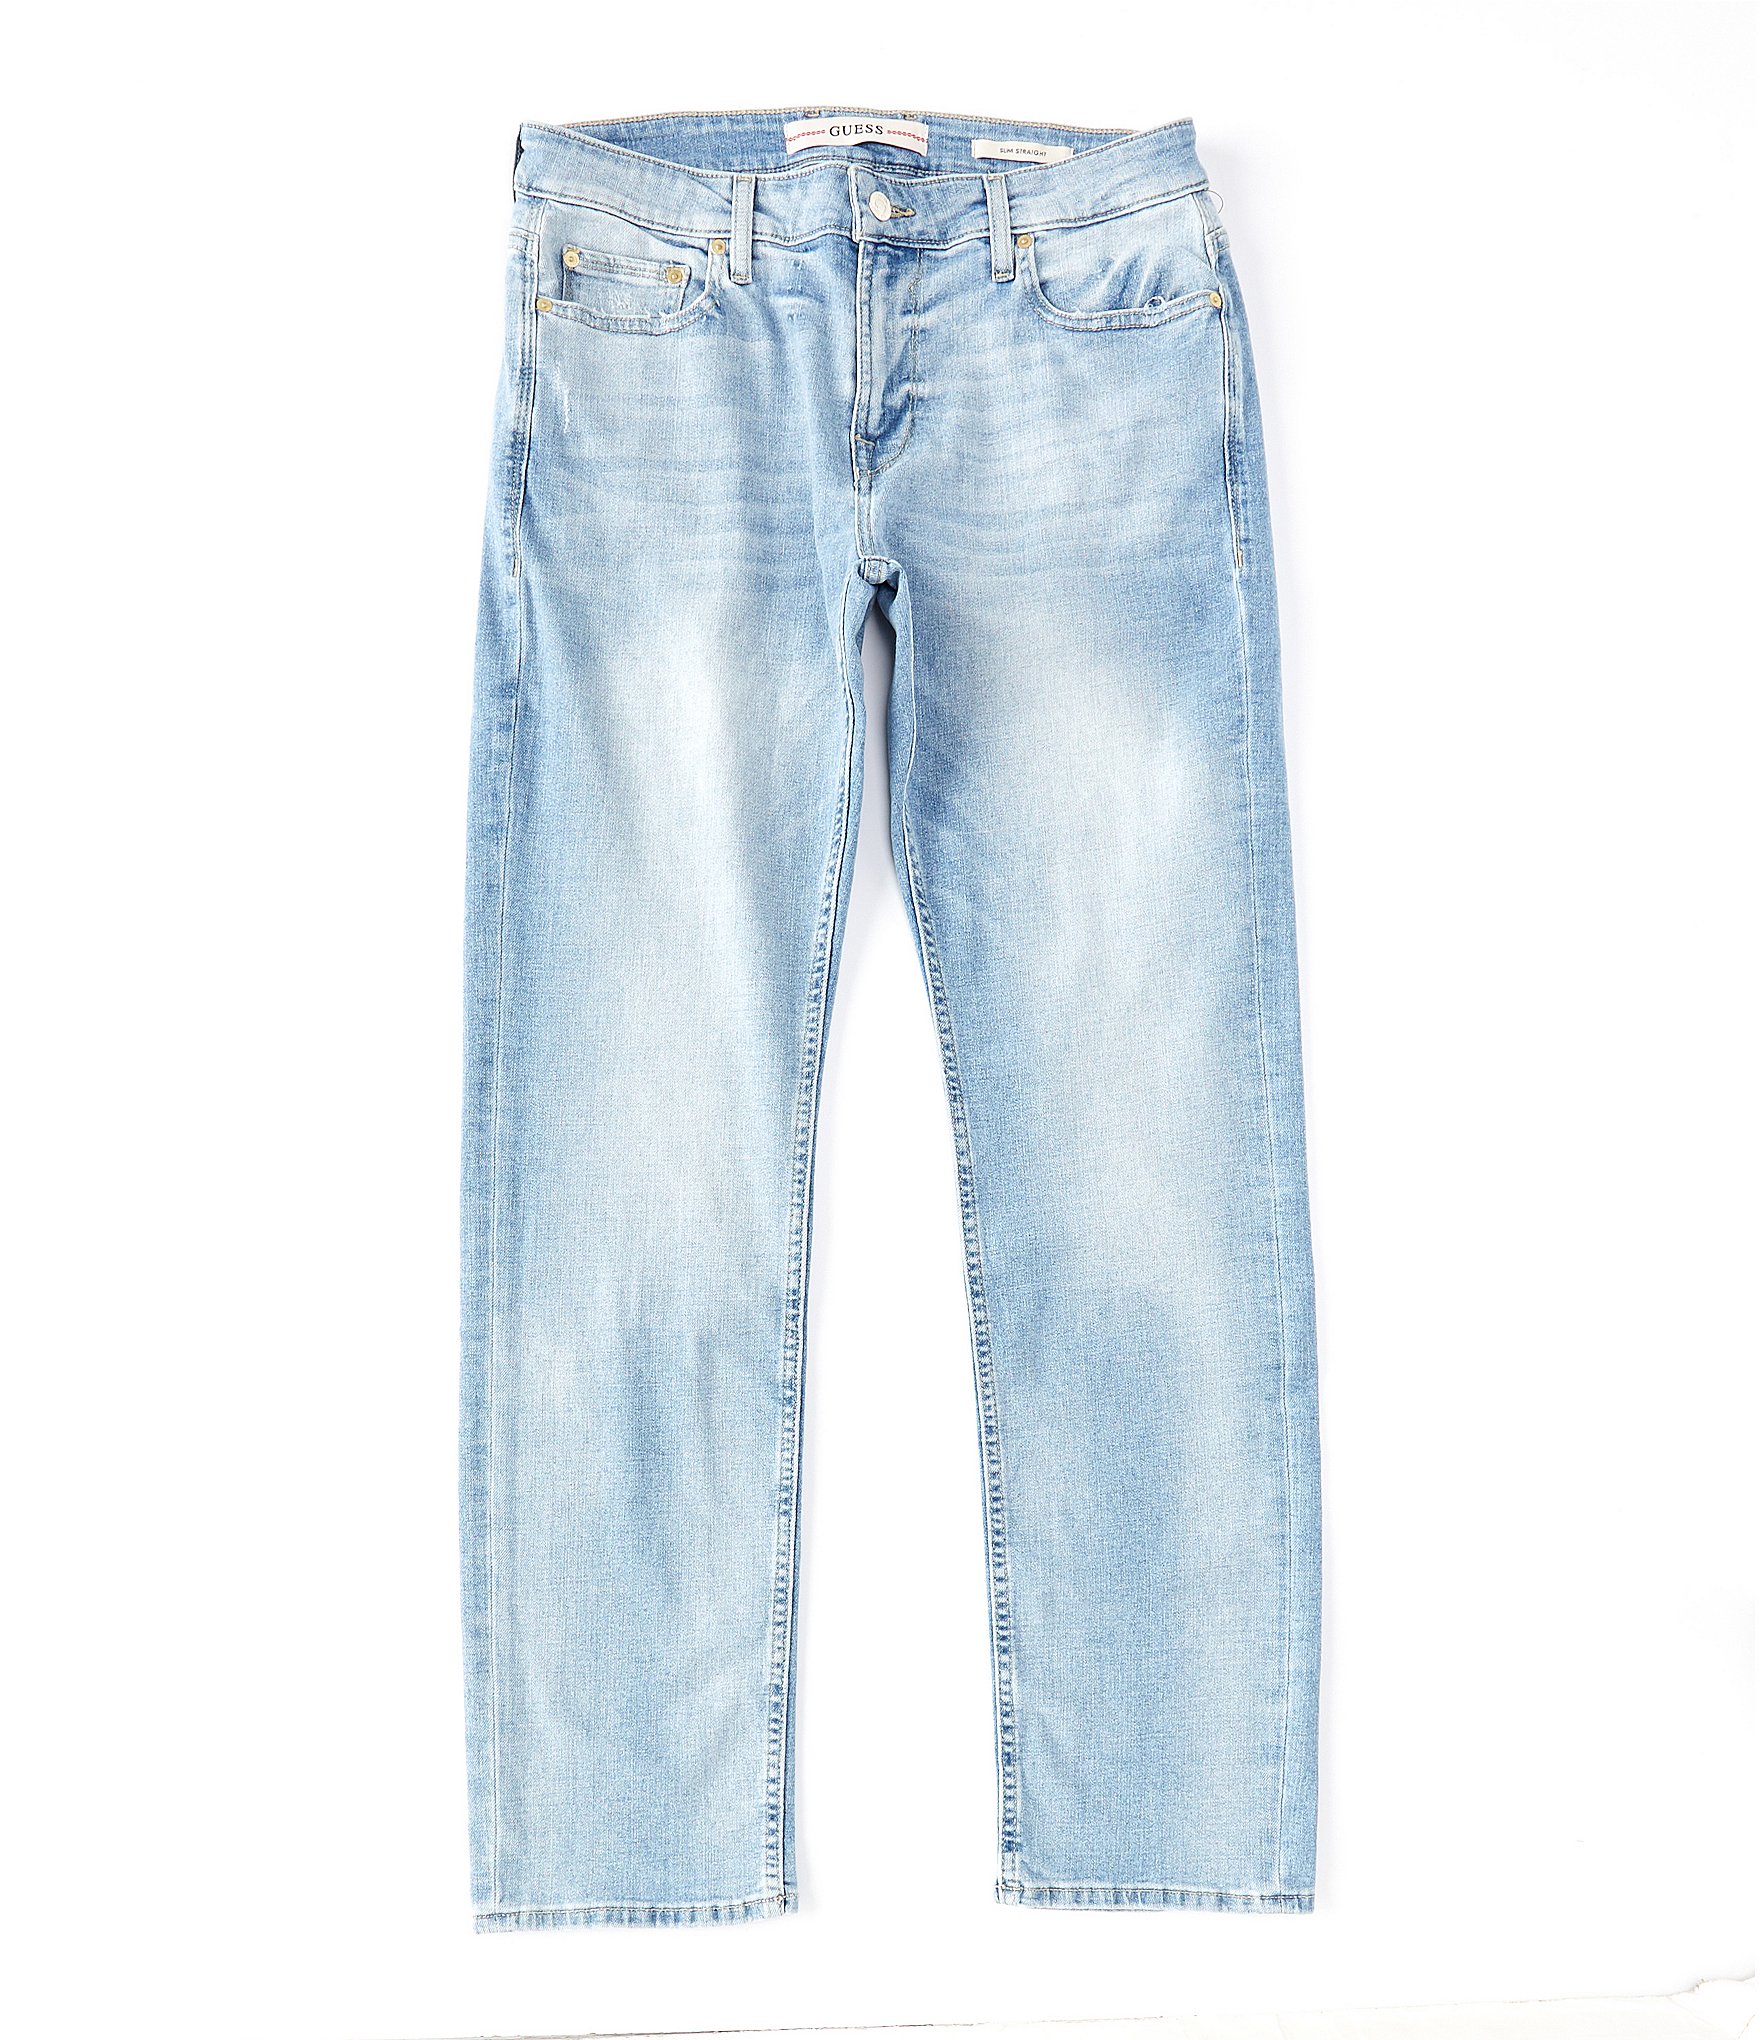 GUESS Cotton Blend Silver Stripe Unfinished Hem Black Jeans Pants - Size 26